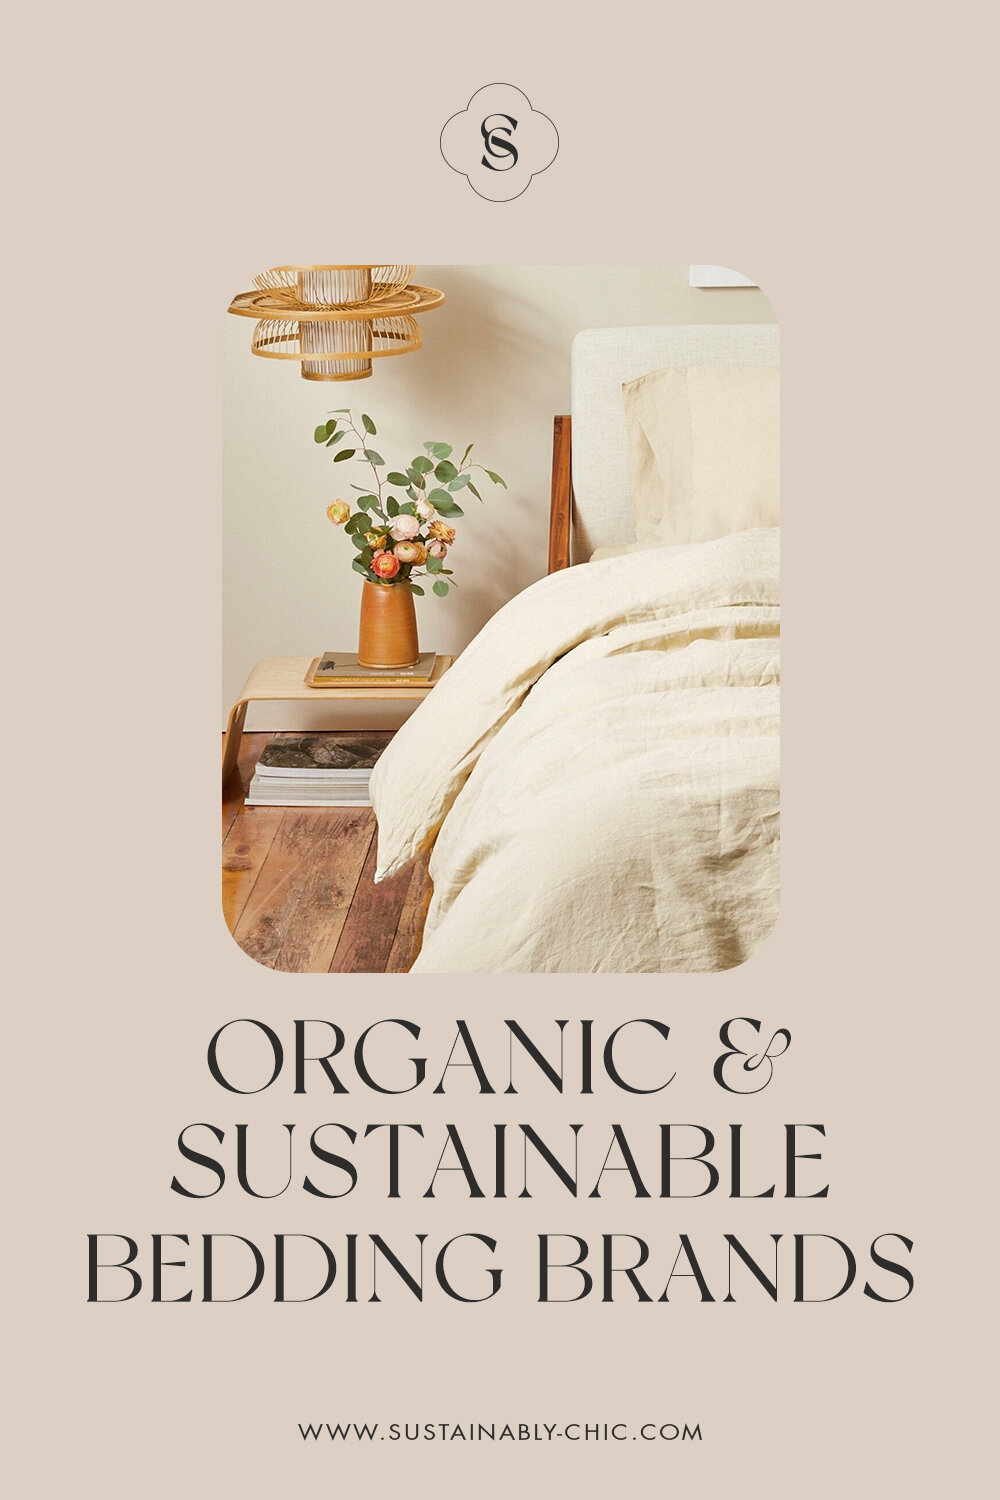 Buy sustainable bedding